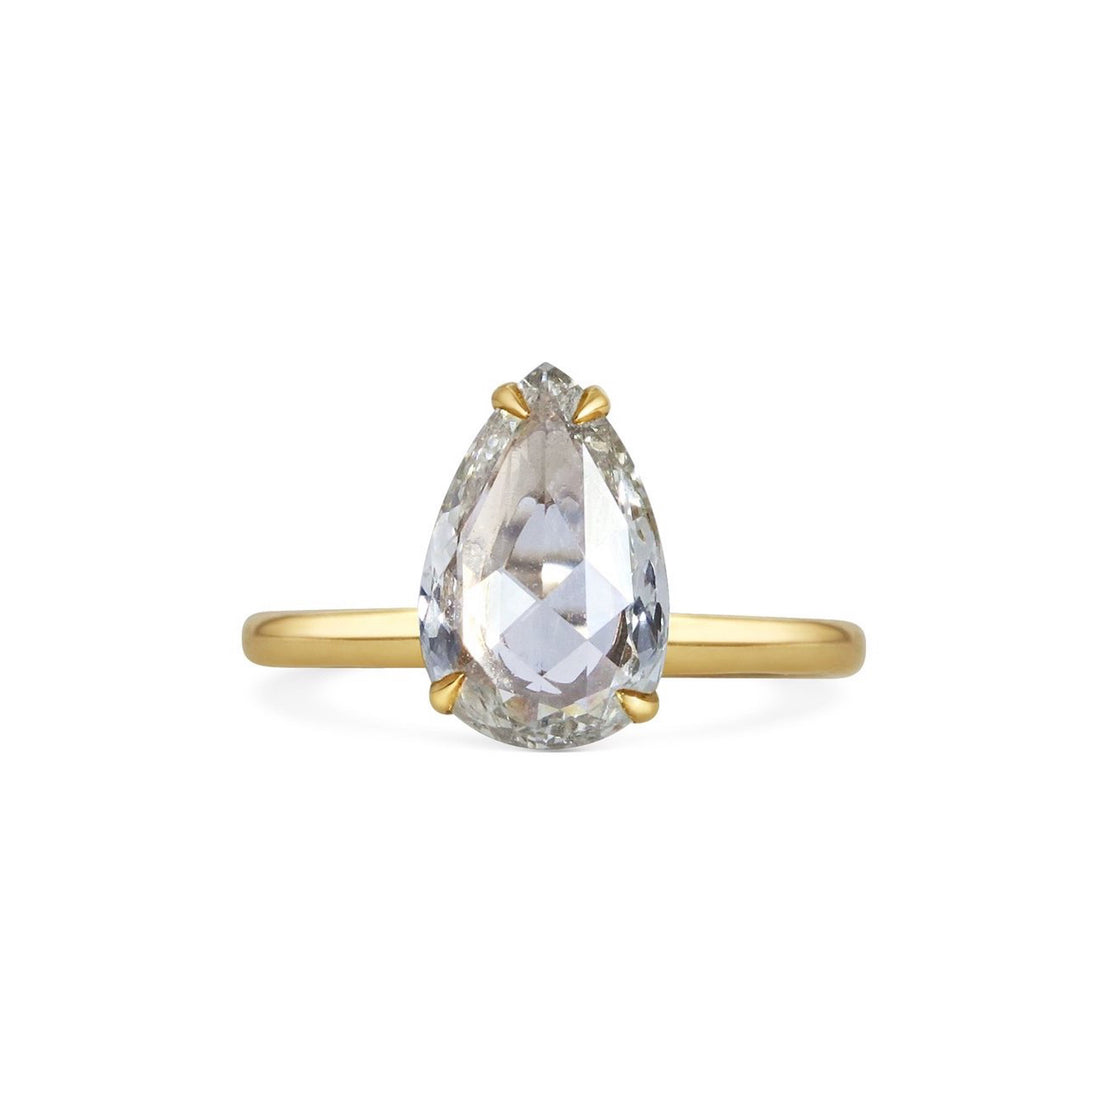  Pale Lemon Diamond Ring by Michelle Oh | The Cut London